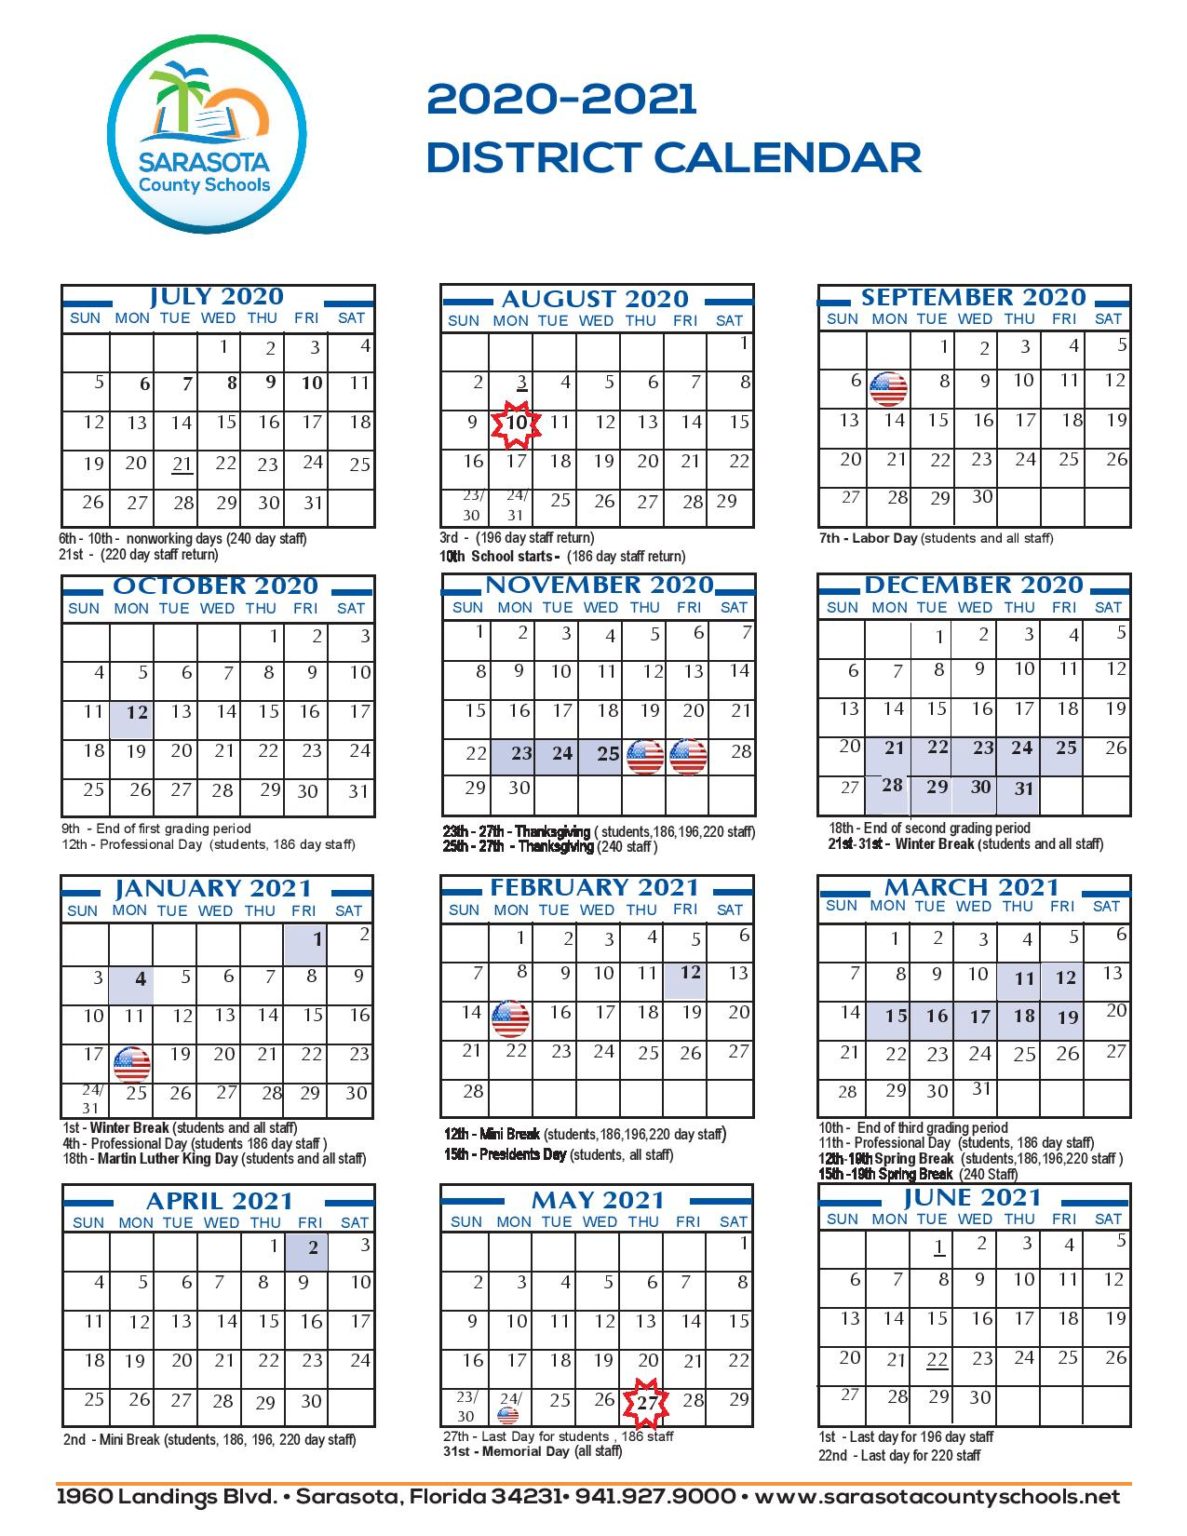 Sarasota County School Calendar 20202021 in PDF Format